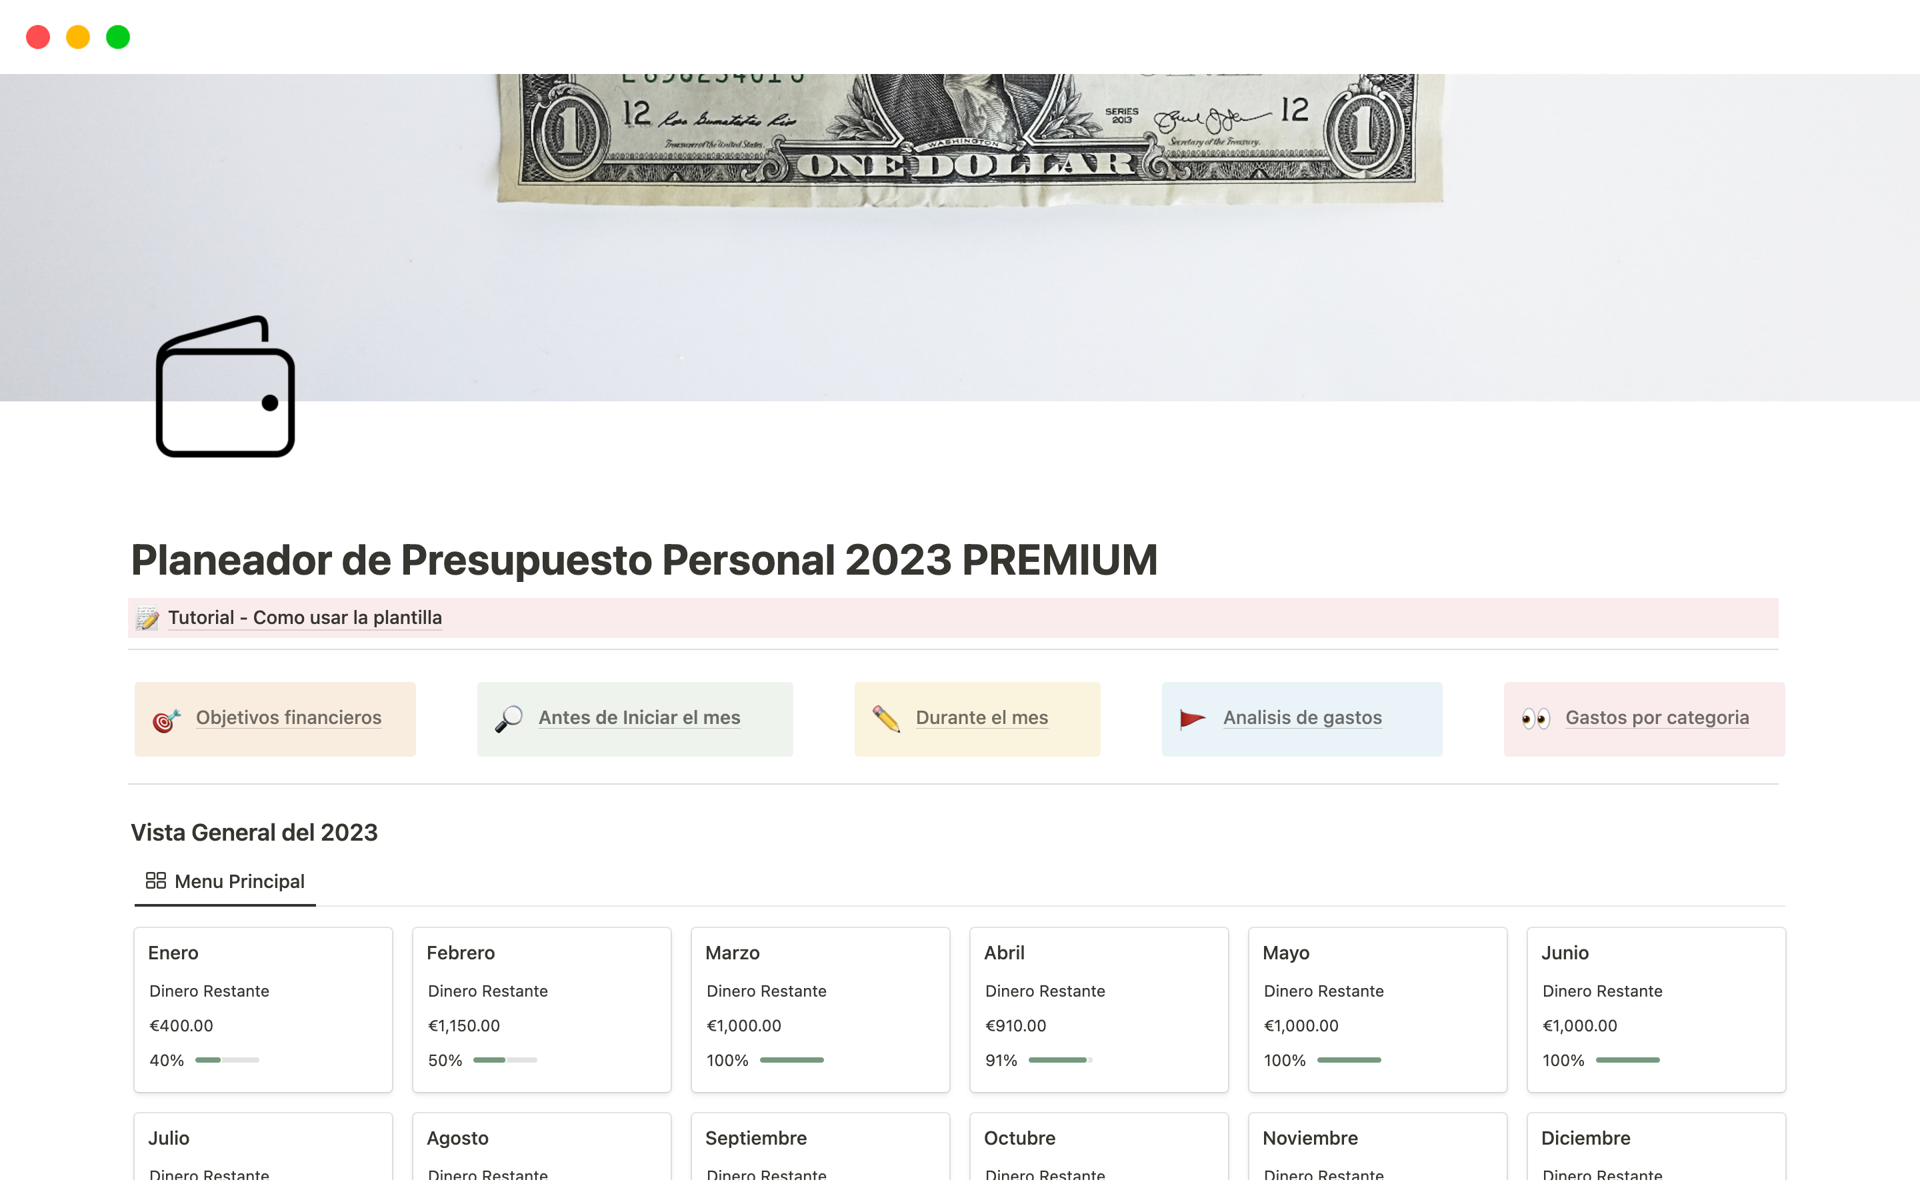 A template preview for Planeador de Presupuesto Personal 2023 PREMIUM